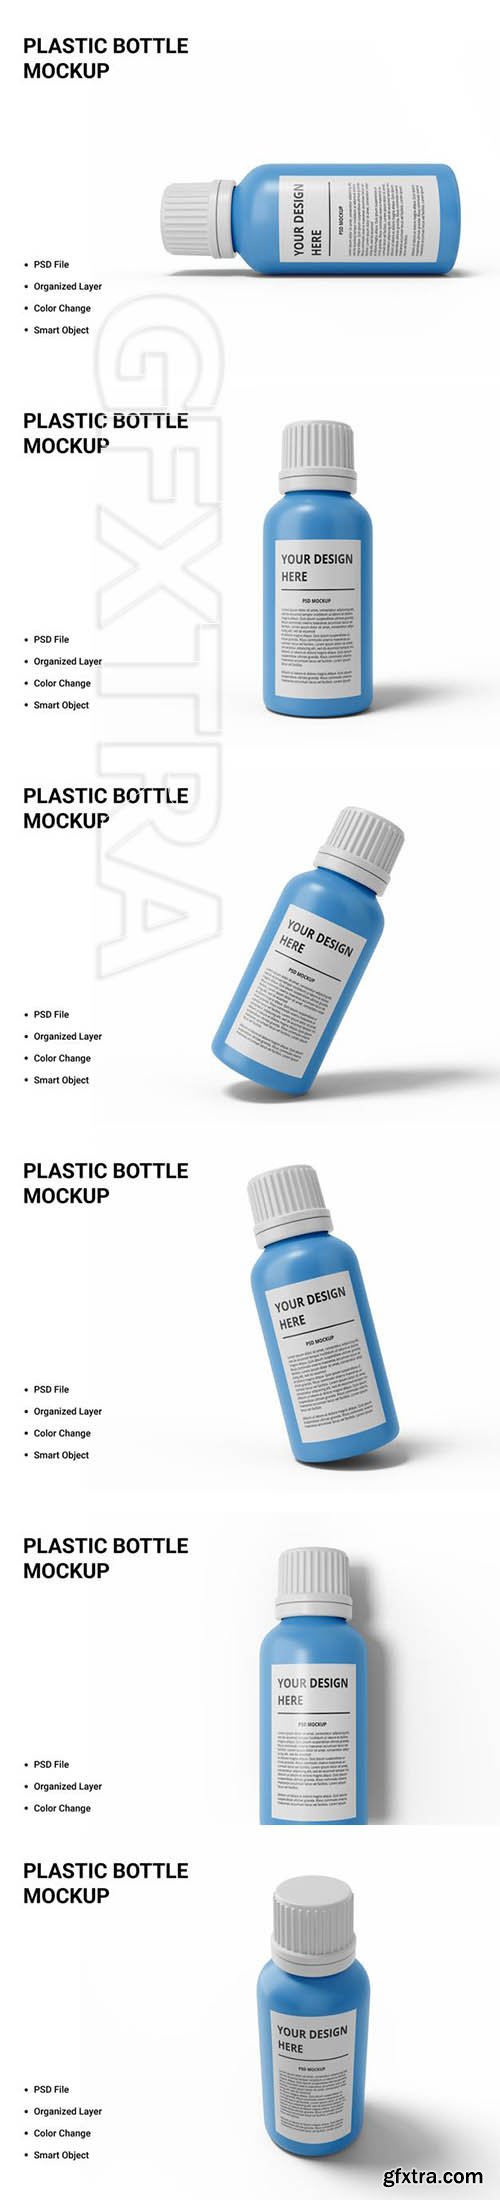 Plastic bottle mockup